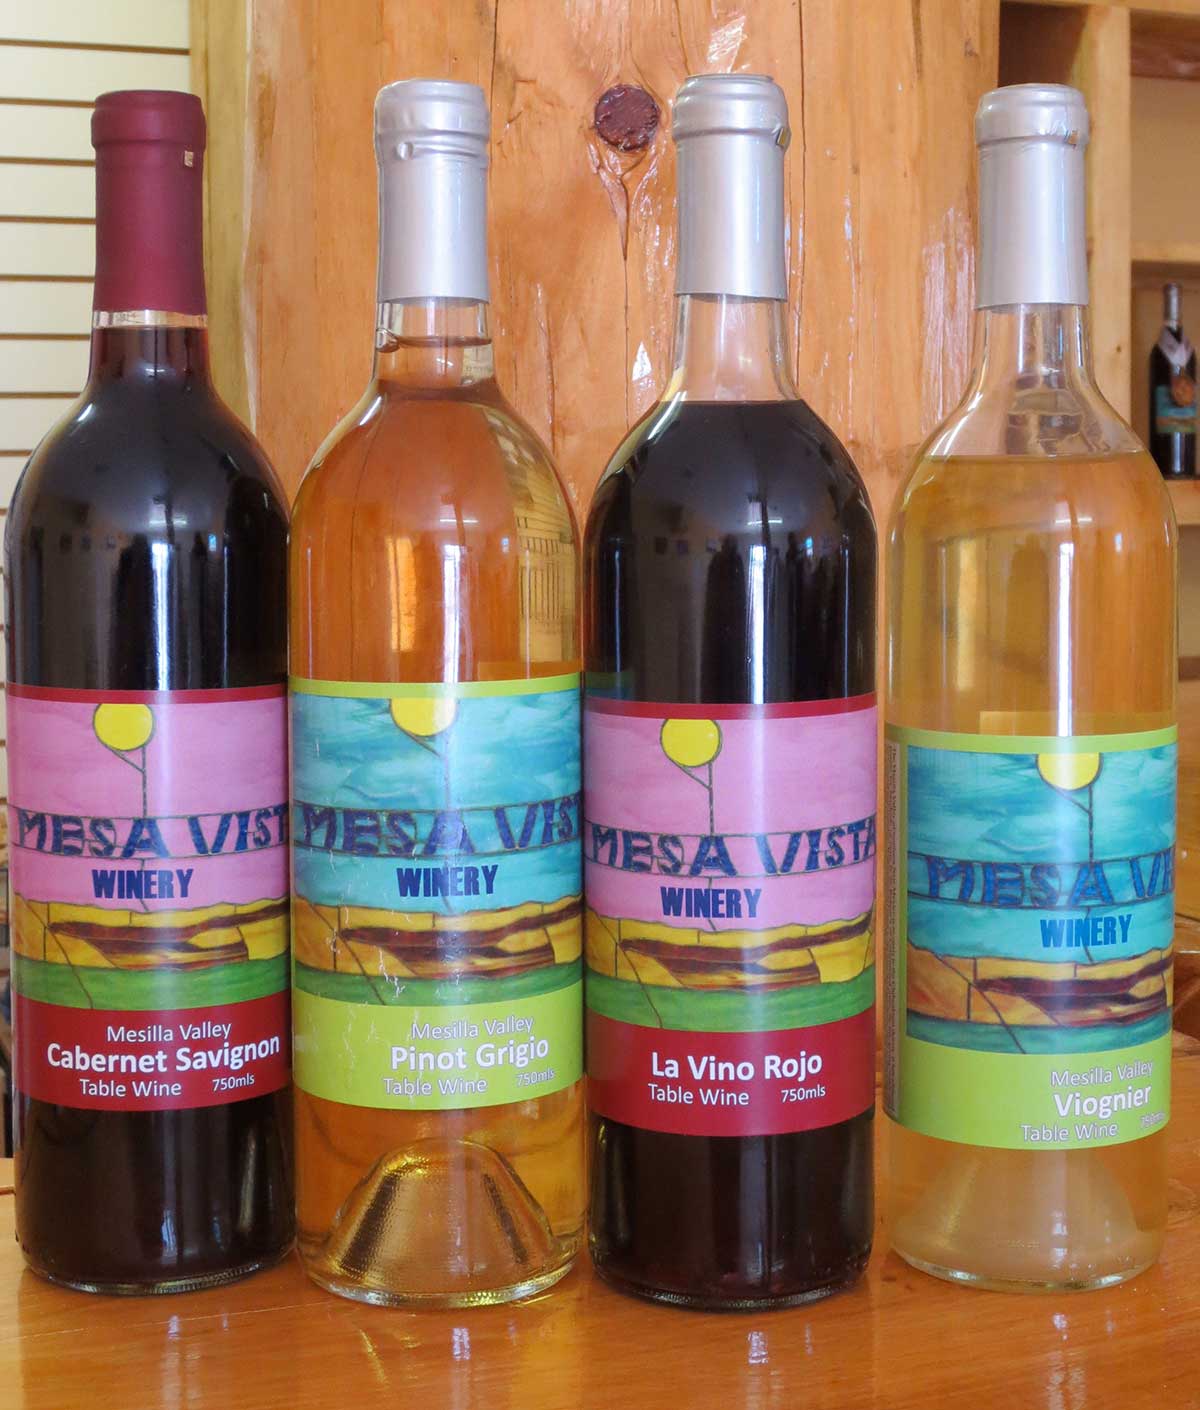 Various bottles of wine from Mesa Vista